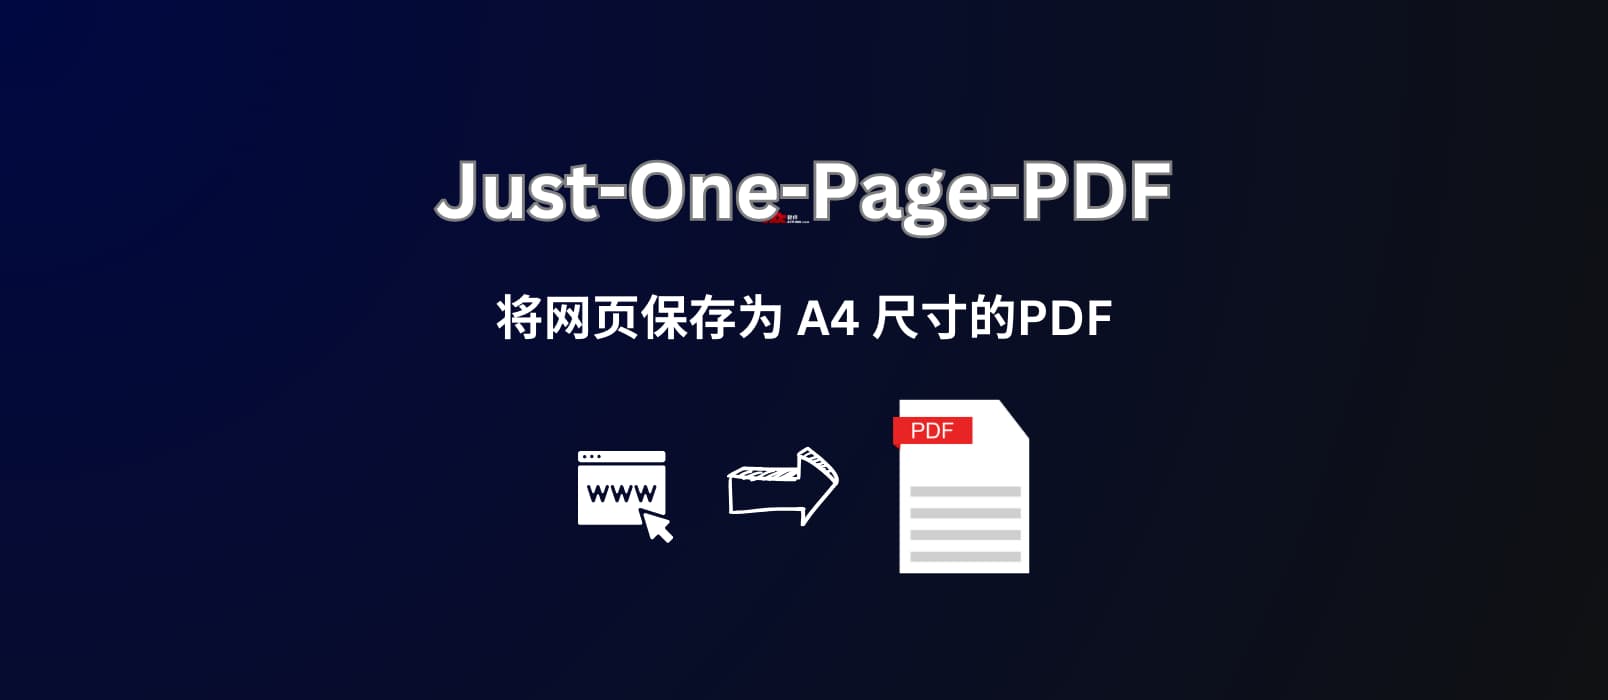 Just-One-Page-PDF – 将网页保存为 PDF：A4 尺寸，支持保存为一页或多页 PDF[Chrome]